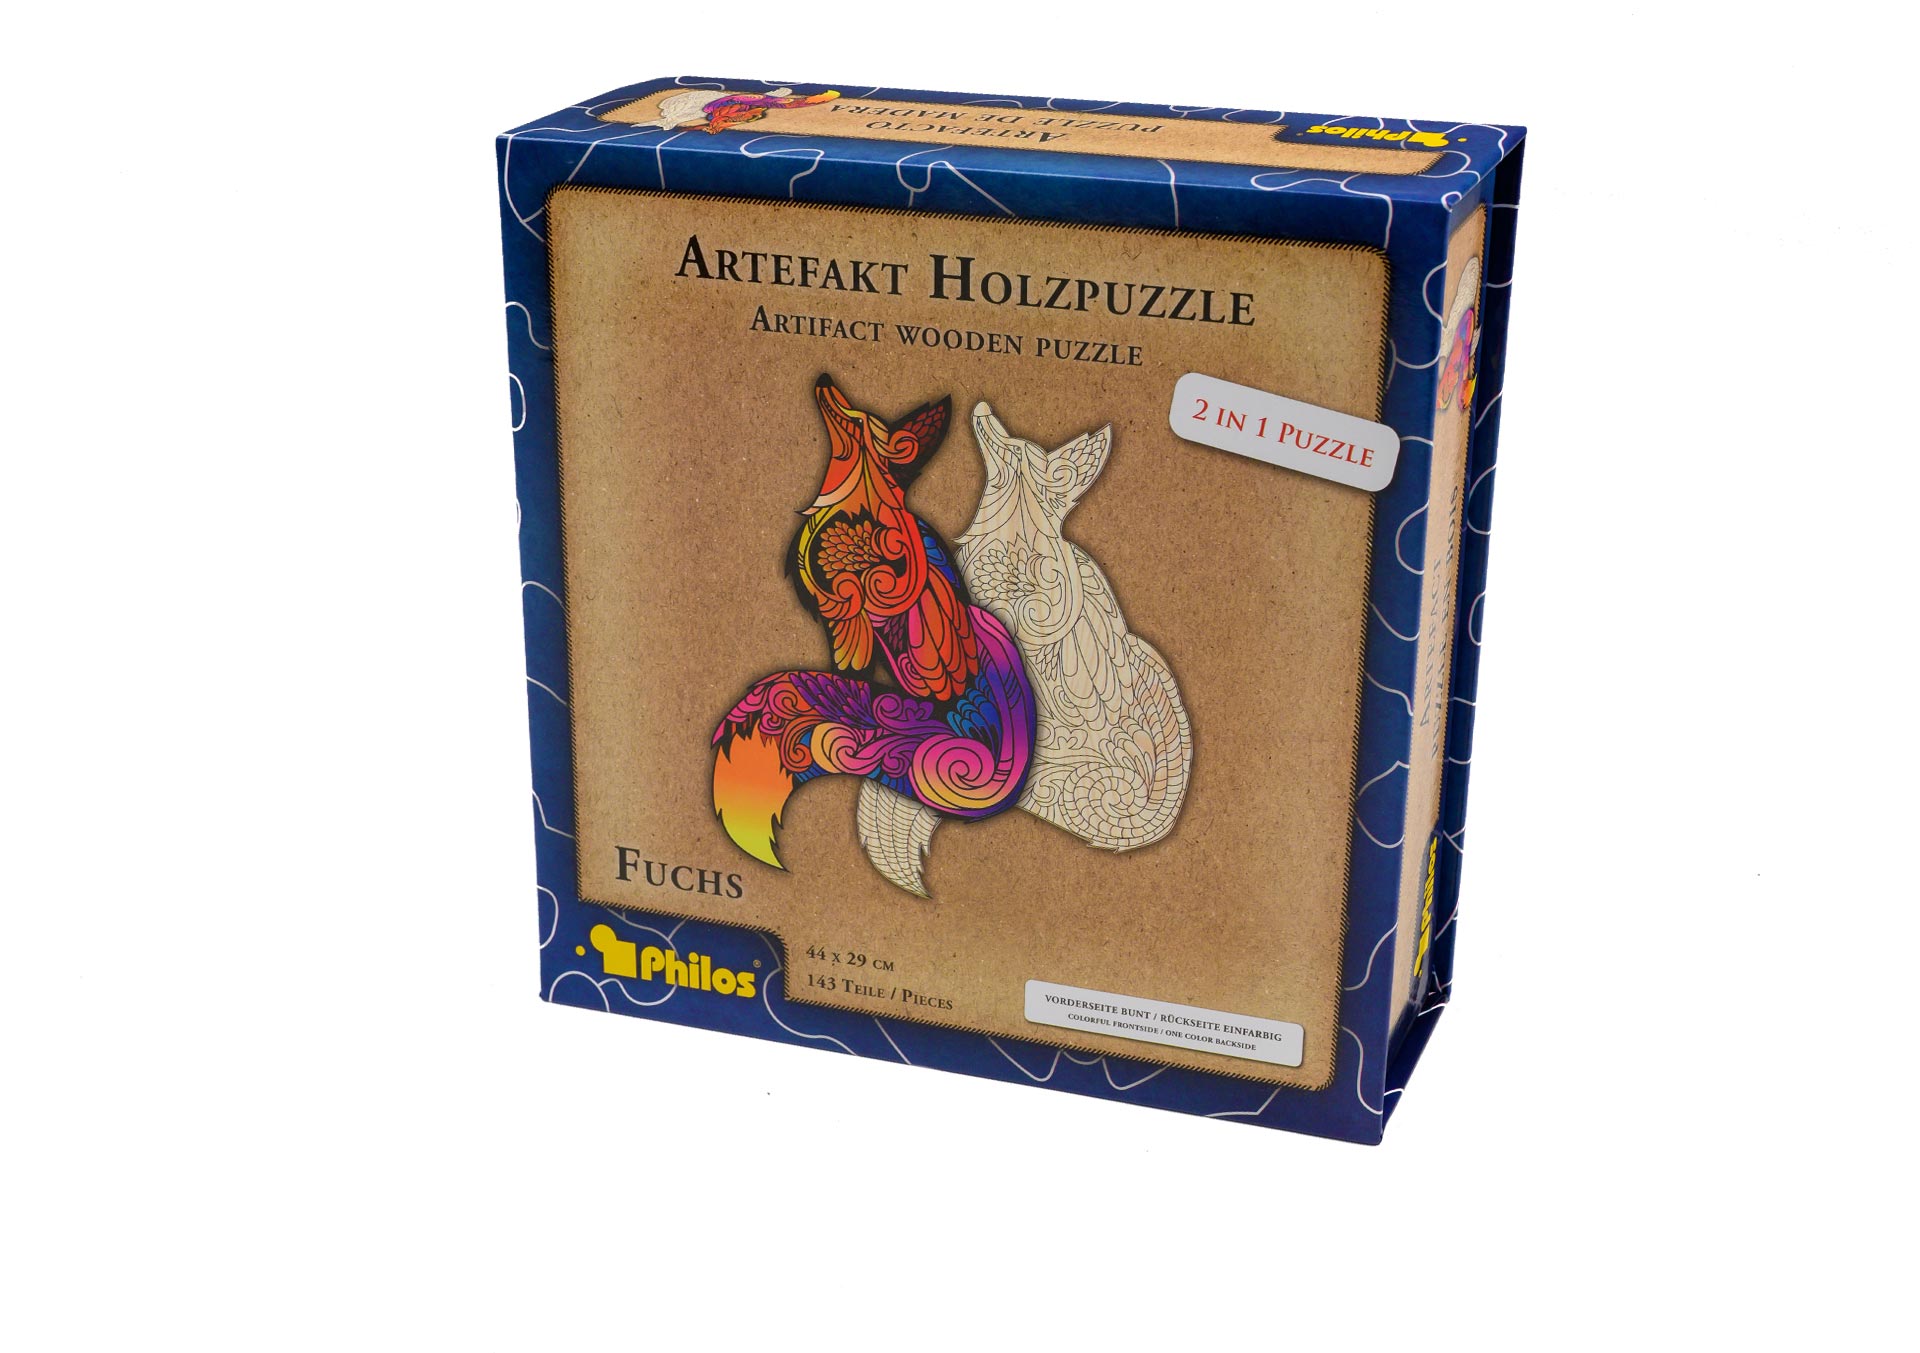 Artefakt Holzpuzzle 2 in 1 Fuchs, 143 Teile, in magnetischer Klappschachtel